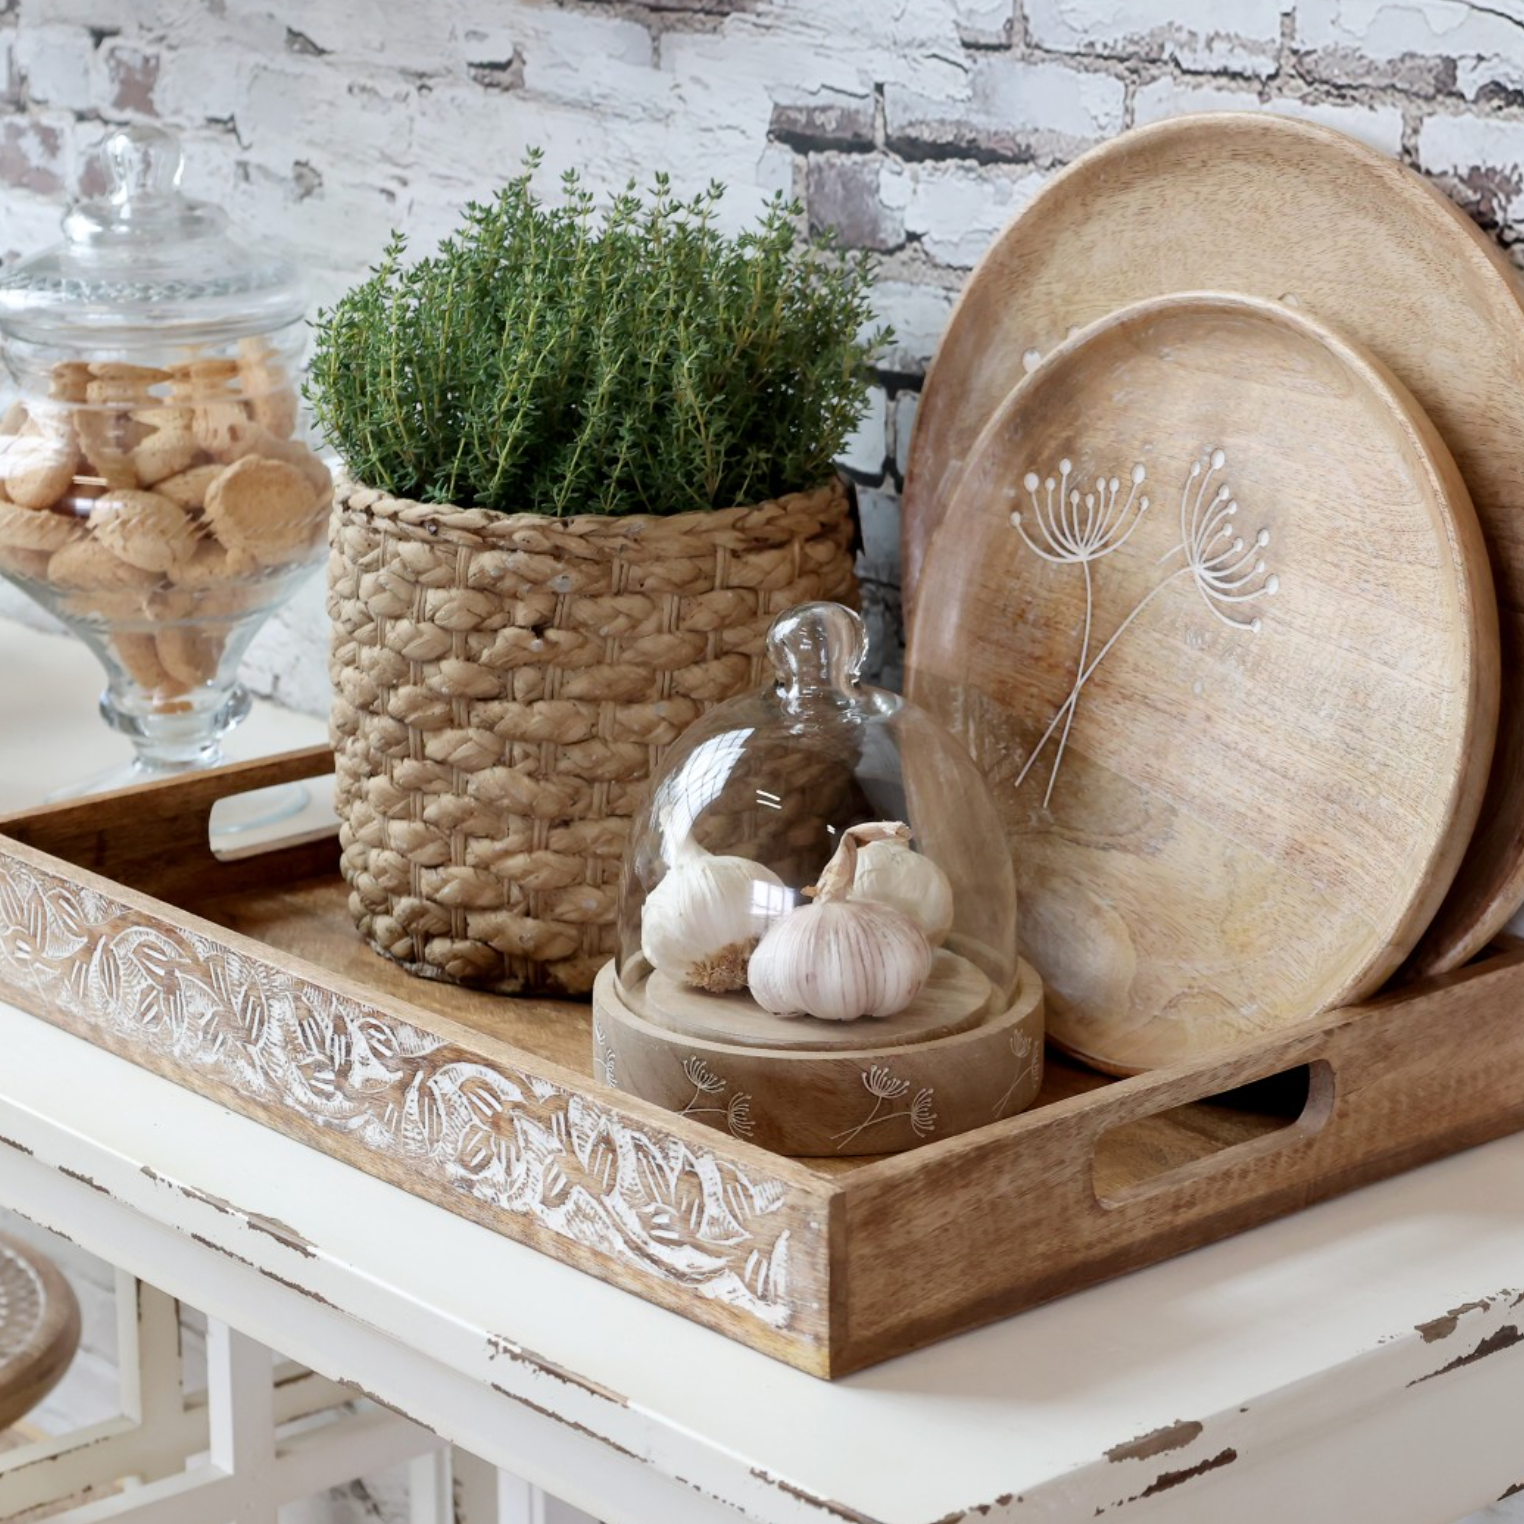 Wood & Glass Cloche with garlic bulbs.